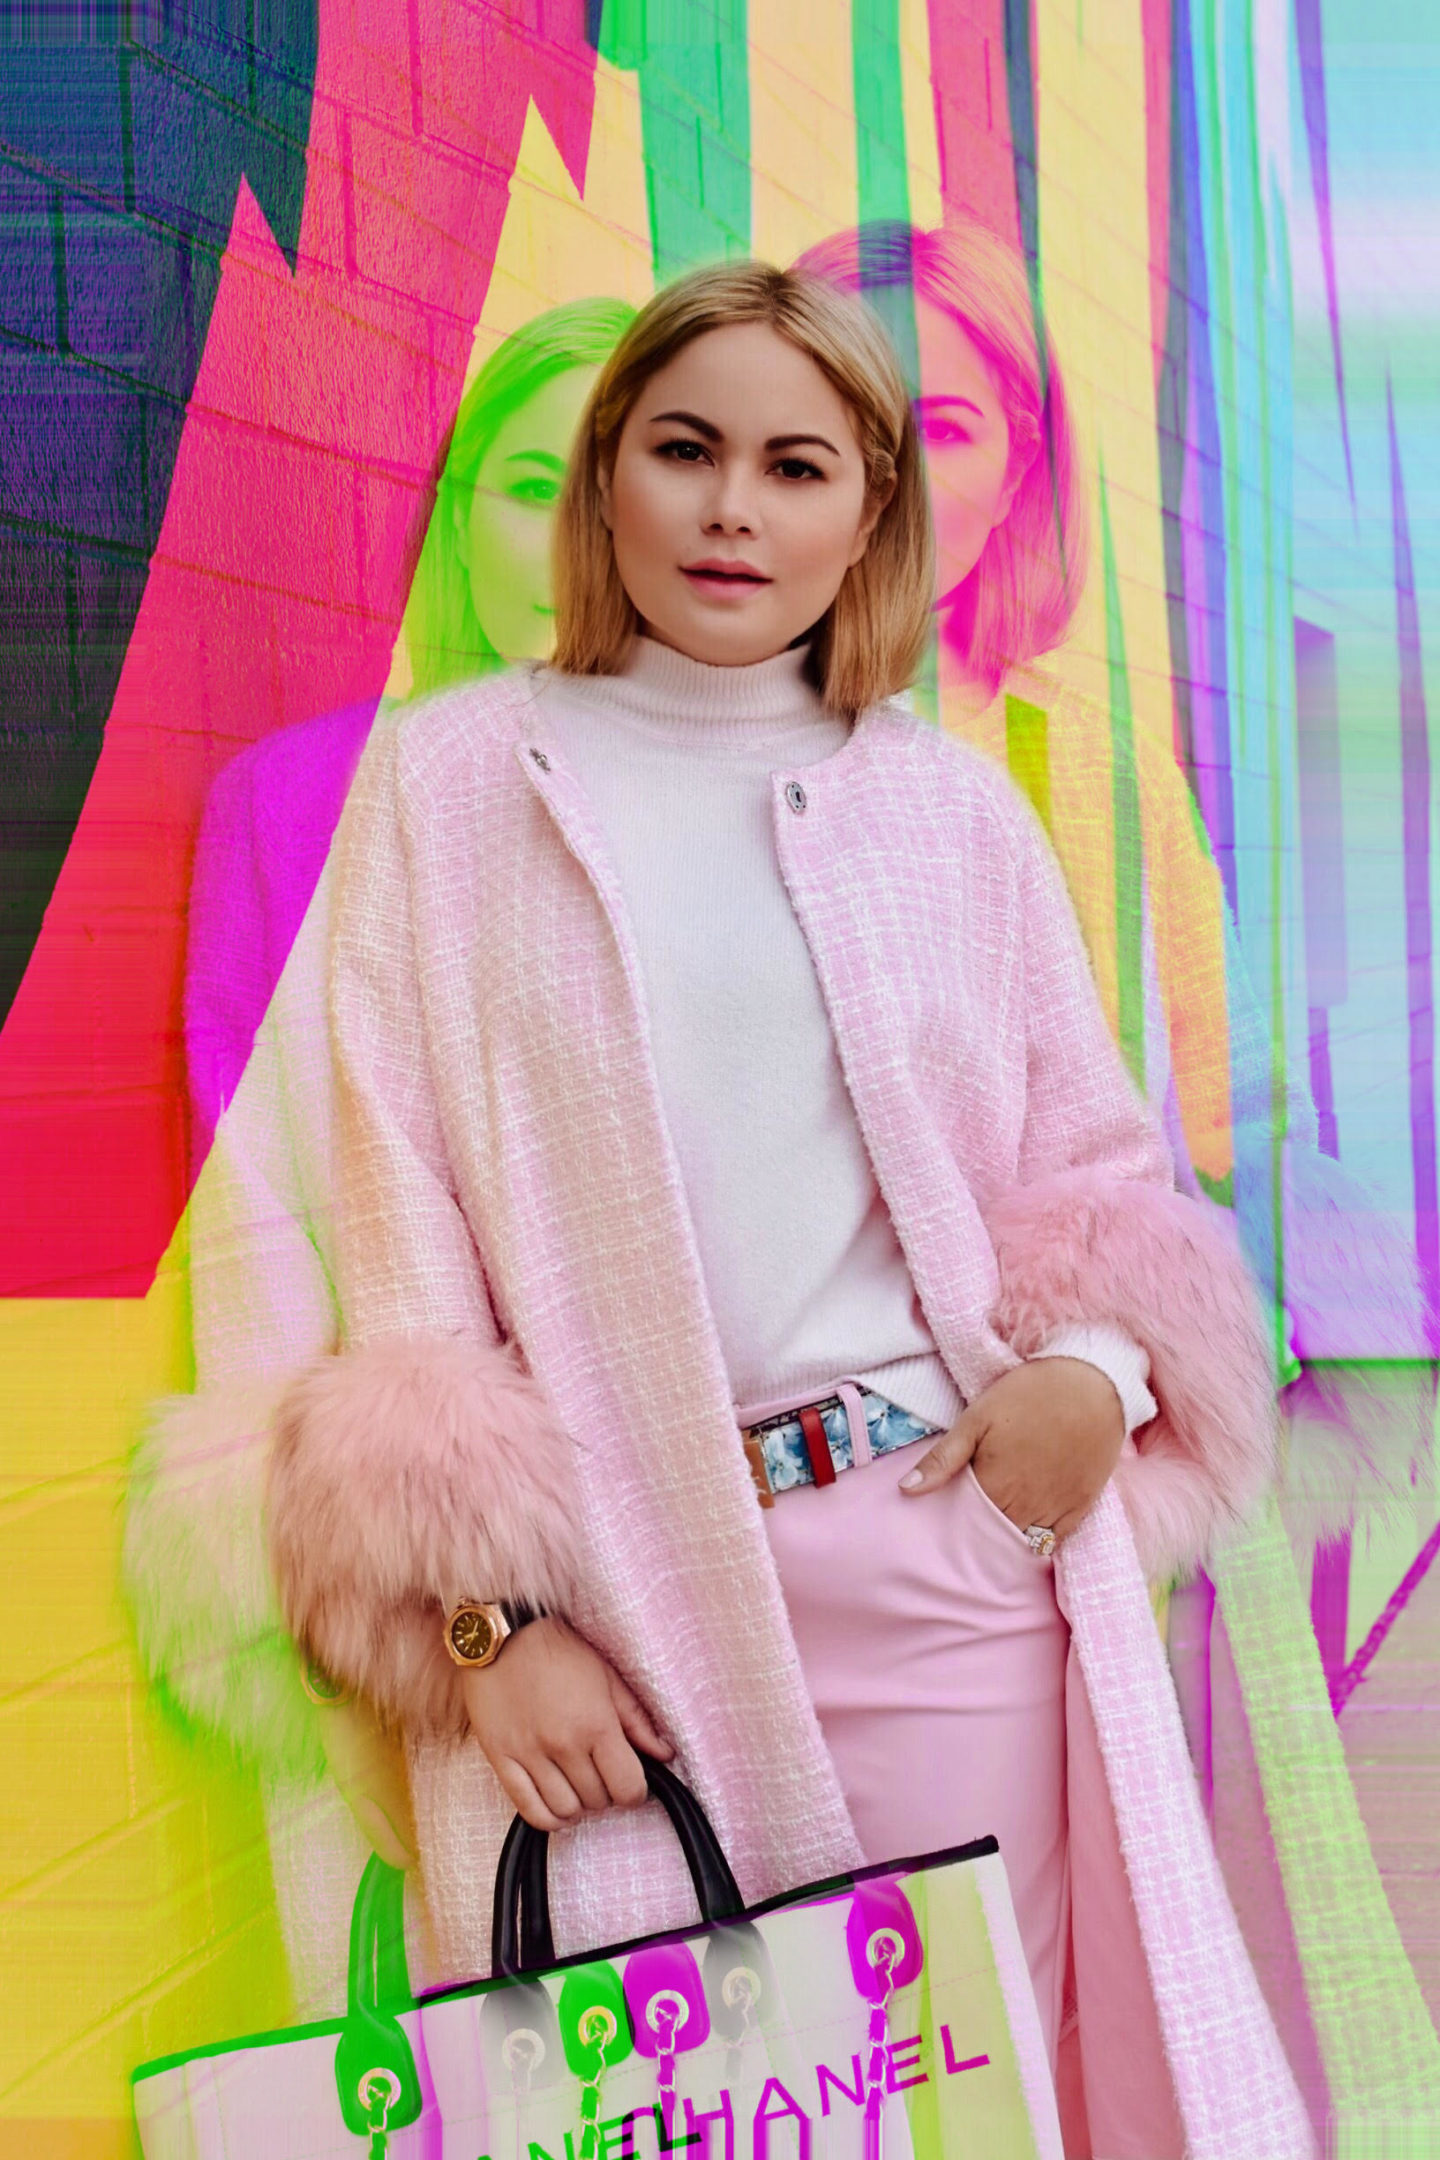 return-of-g-shock-watch-womens-influencer-marketing-pink-outfit-vanessa-lambert-whatwouldvwear